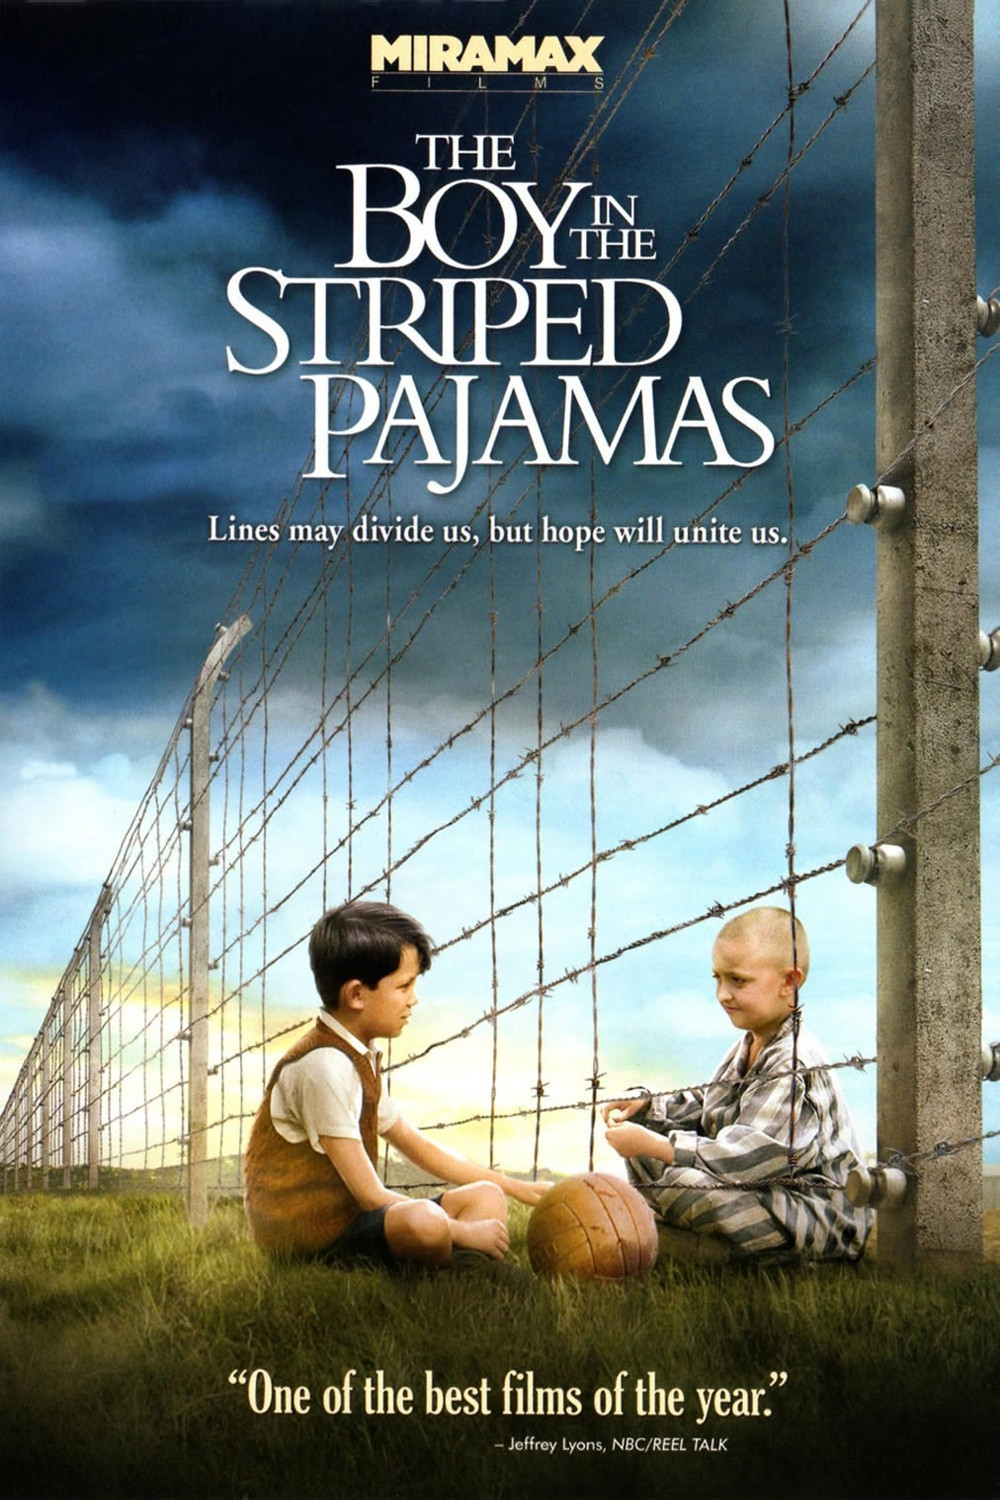 The Boy In The Striped Pyjamas